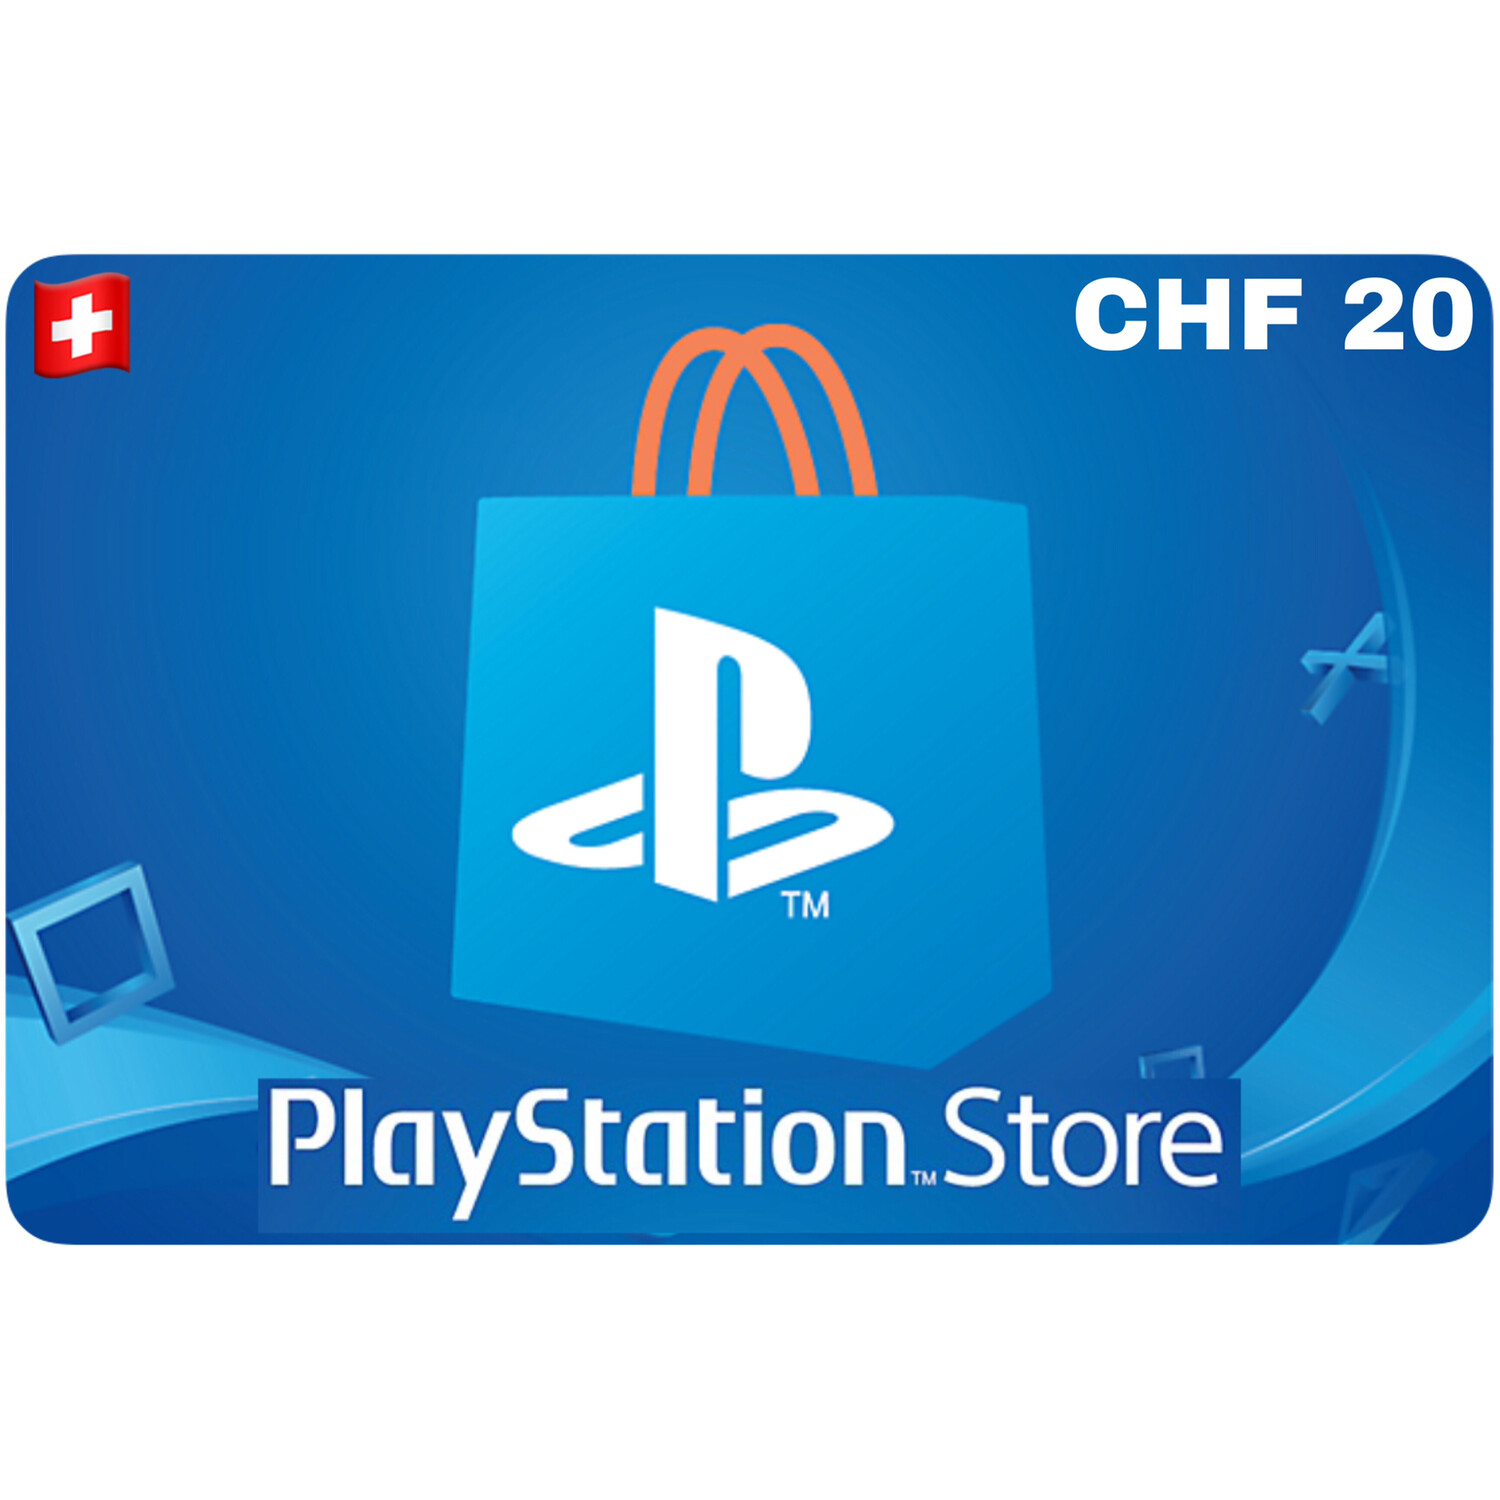 Playstation Store Gift Card Switzerland CHF 20